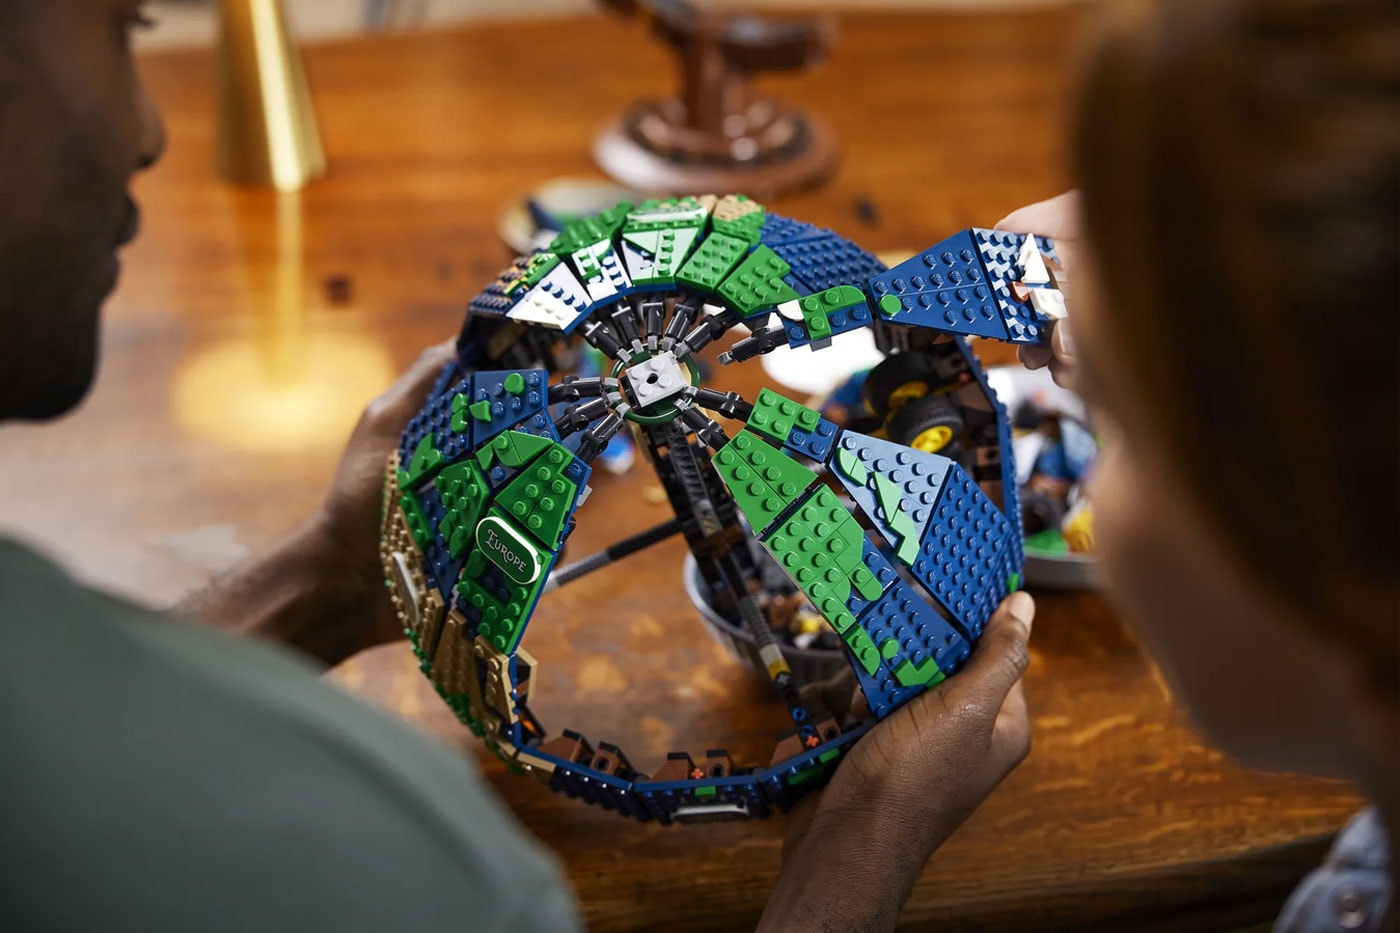 LEGO Ideas「The Globe」地球儀積木套組正式登場